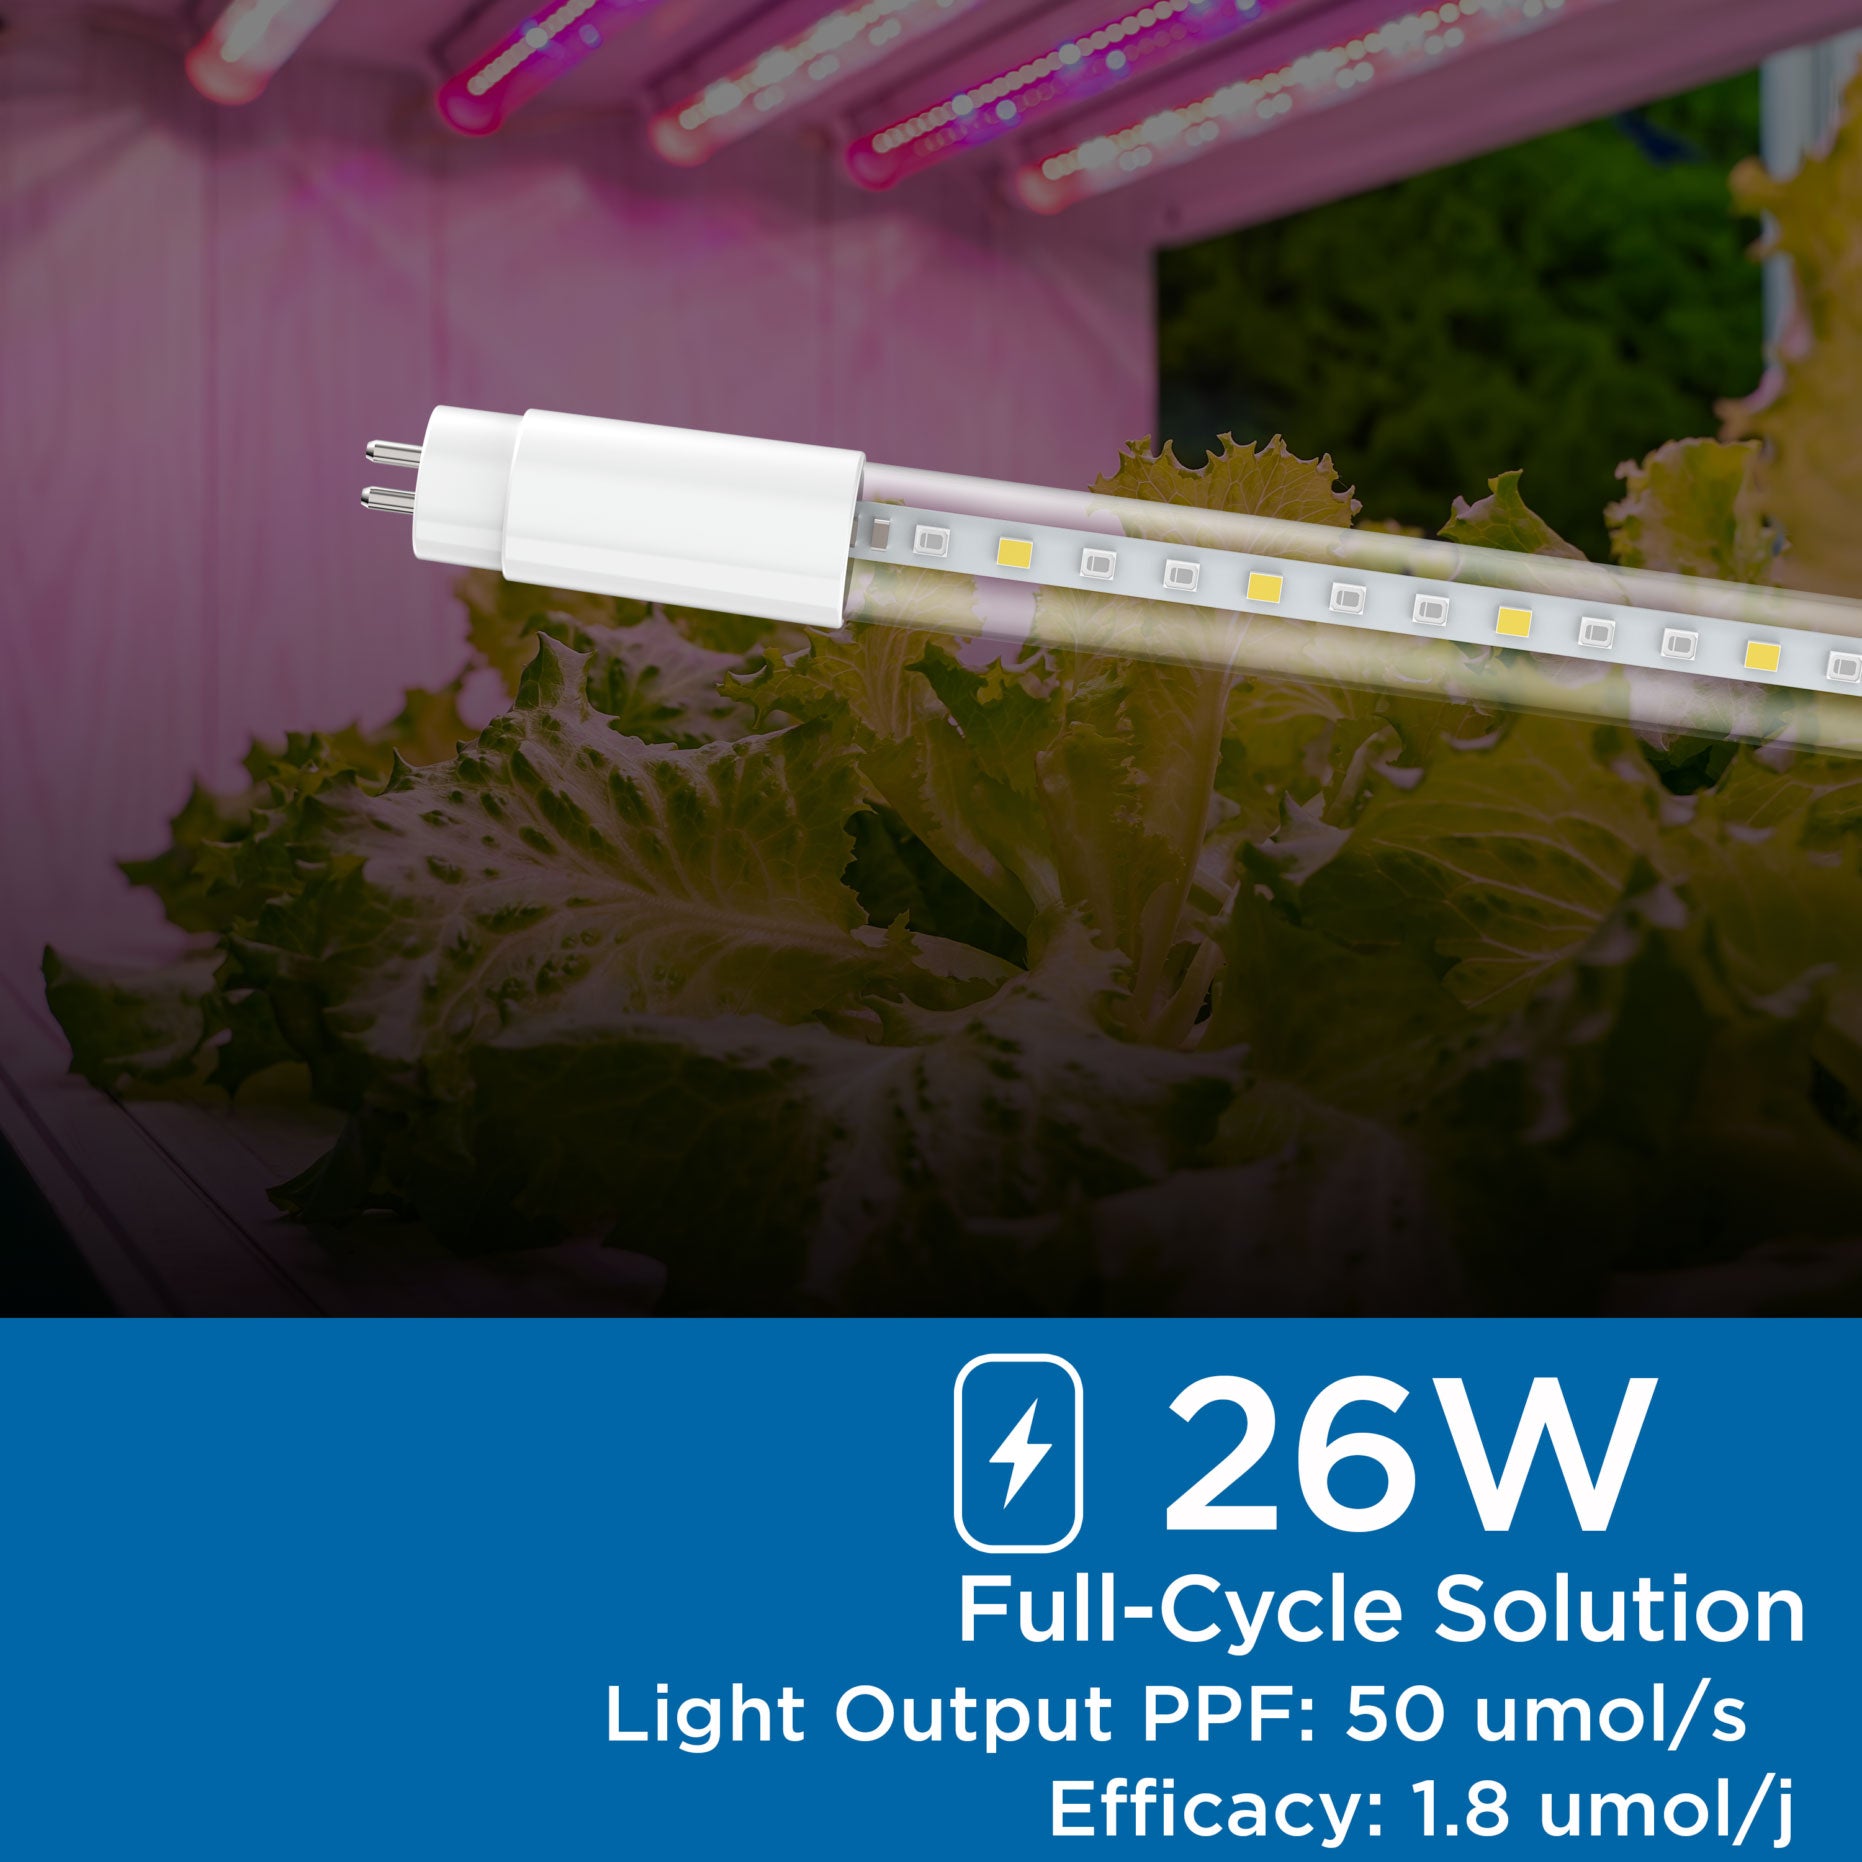 The Viribright Virigrow grow bulb tube installed in a vertical farming setup, providing optimal lighting for healthy plant growth.